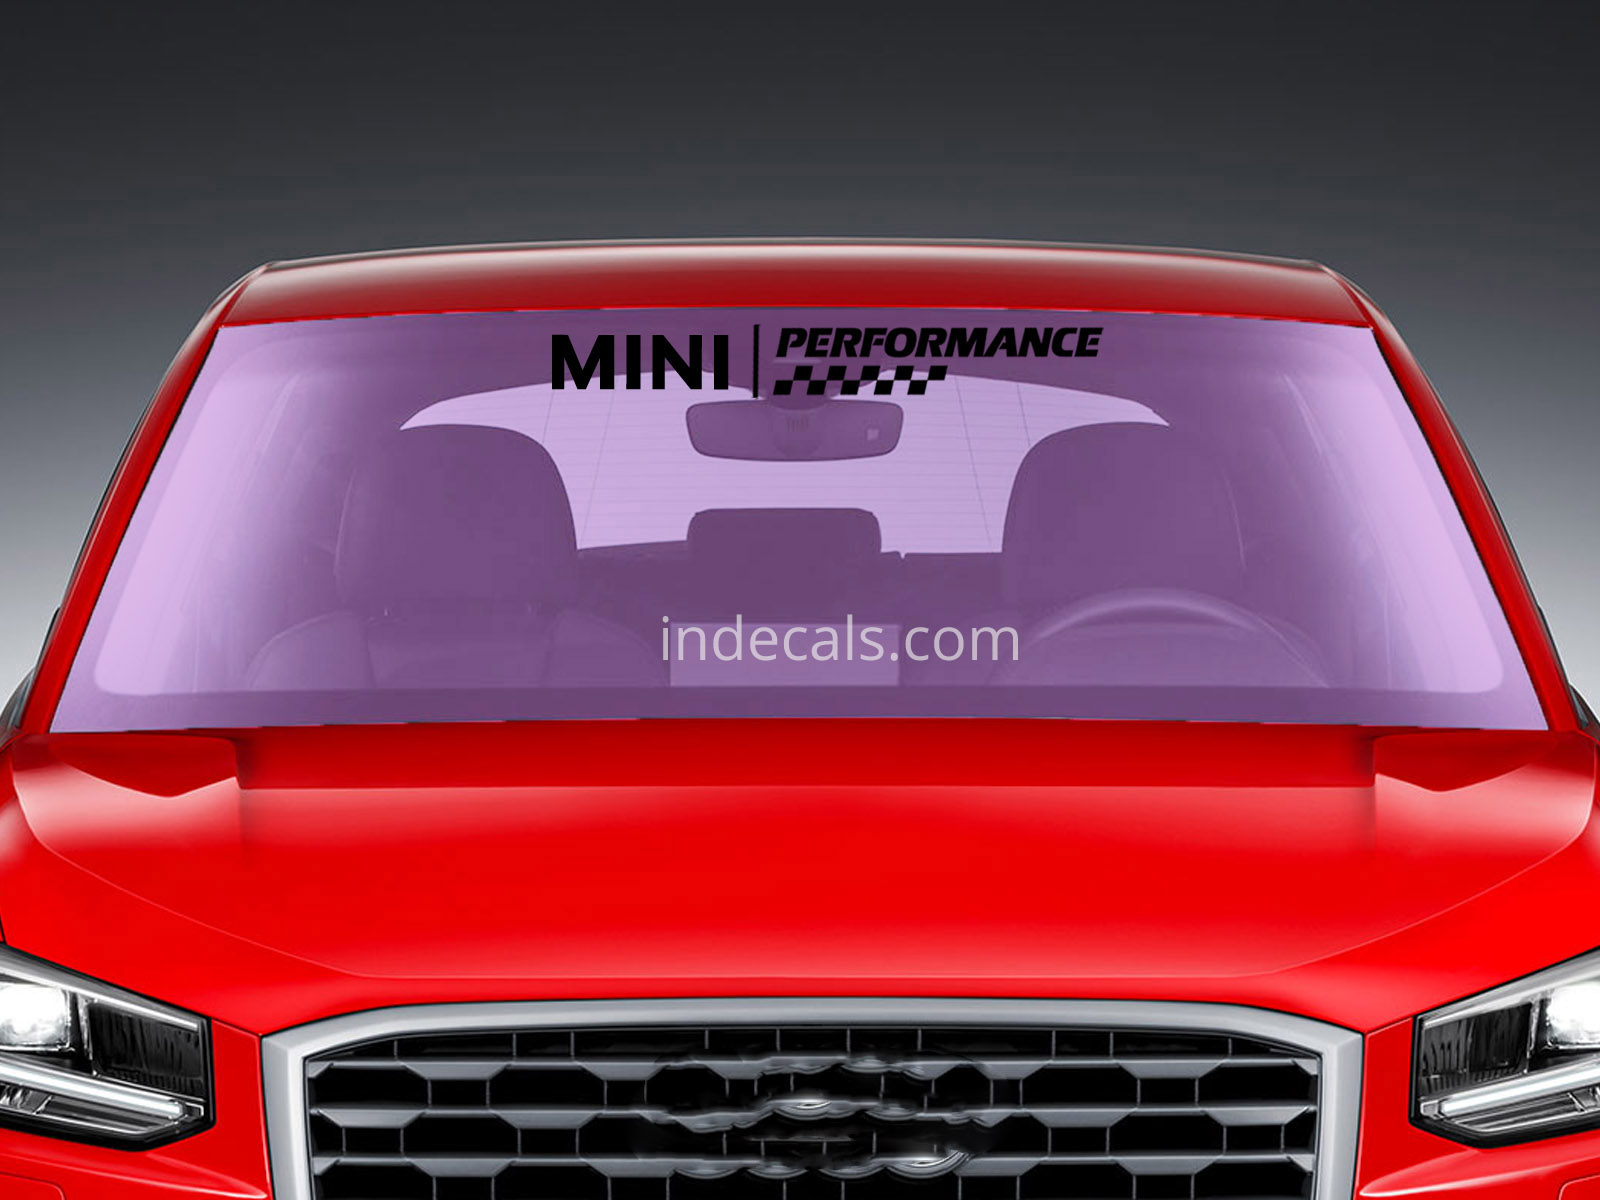 1 x Mini Performance Sticker for Windshield or Back Window - Black